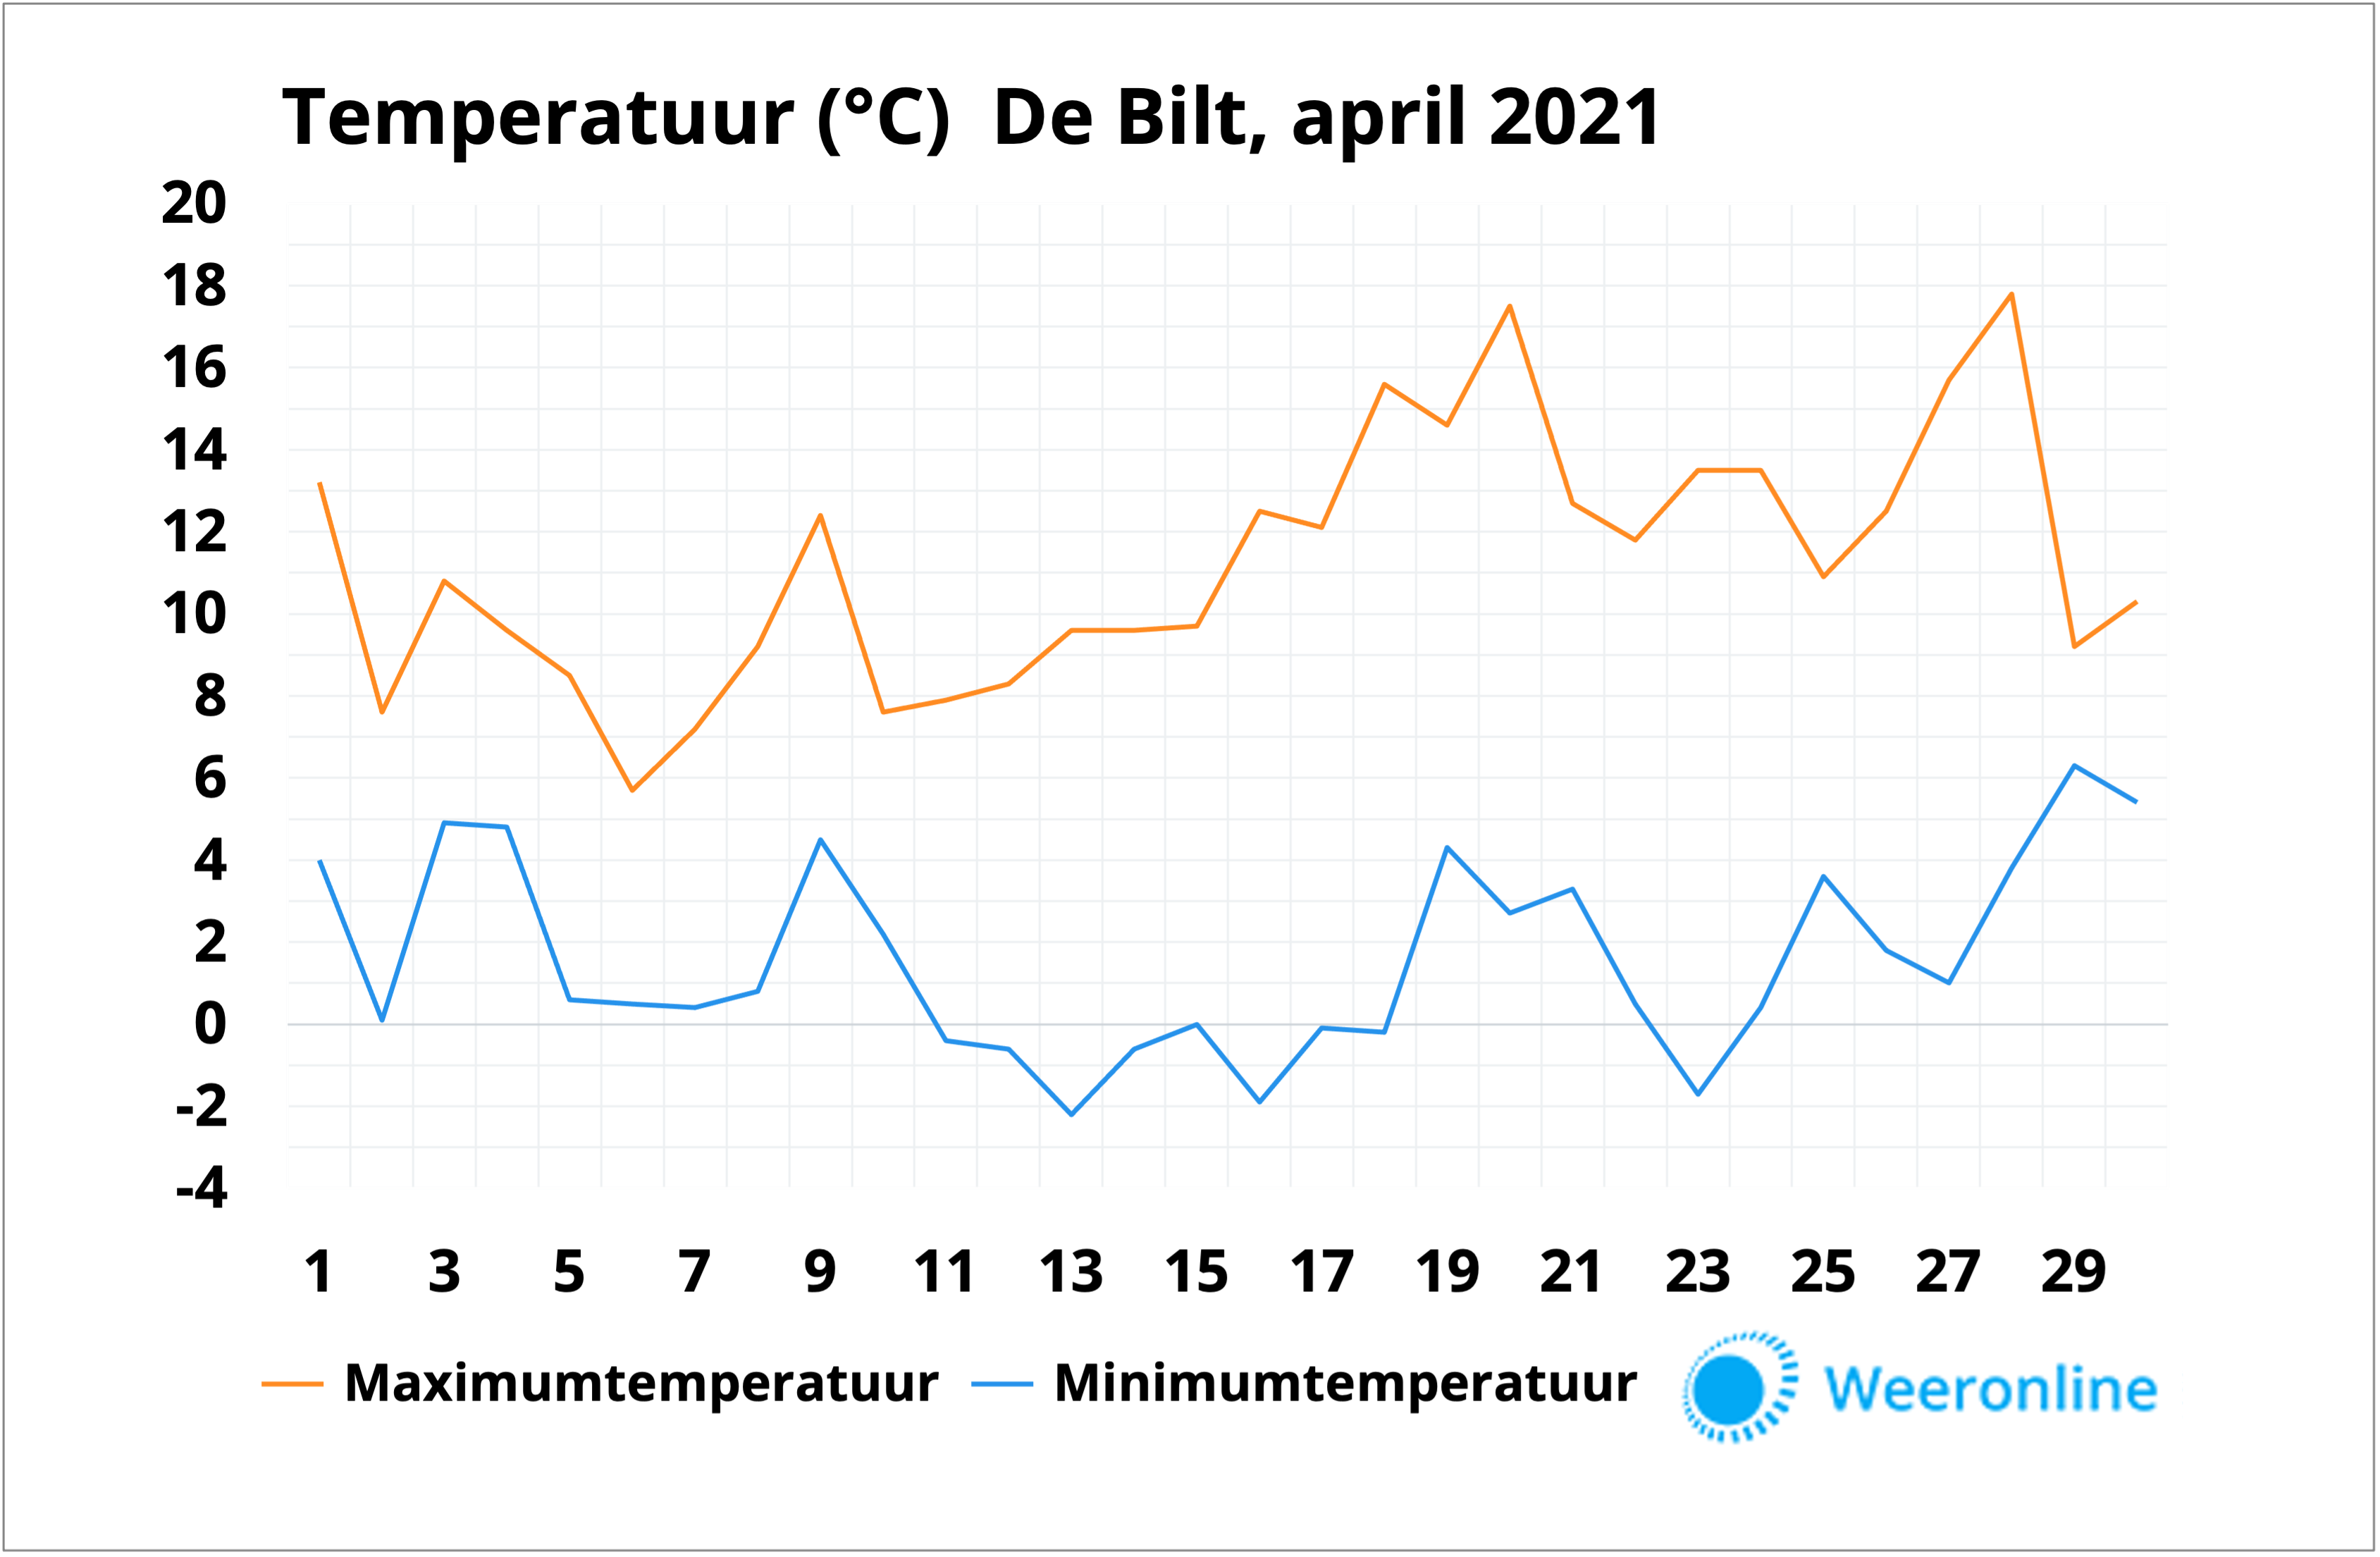 Temperatuurgrafiek april 2021 De Bilt